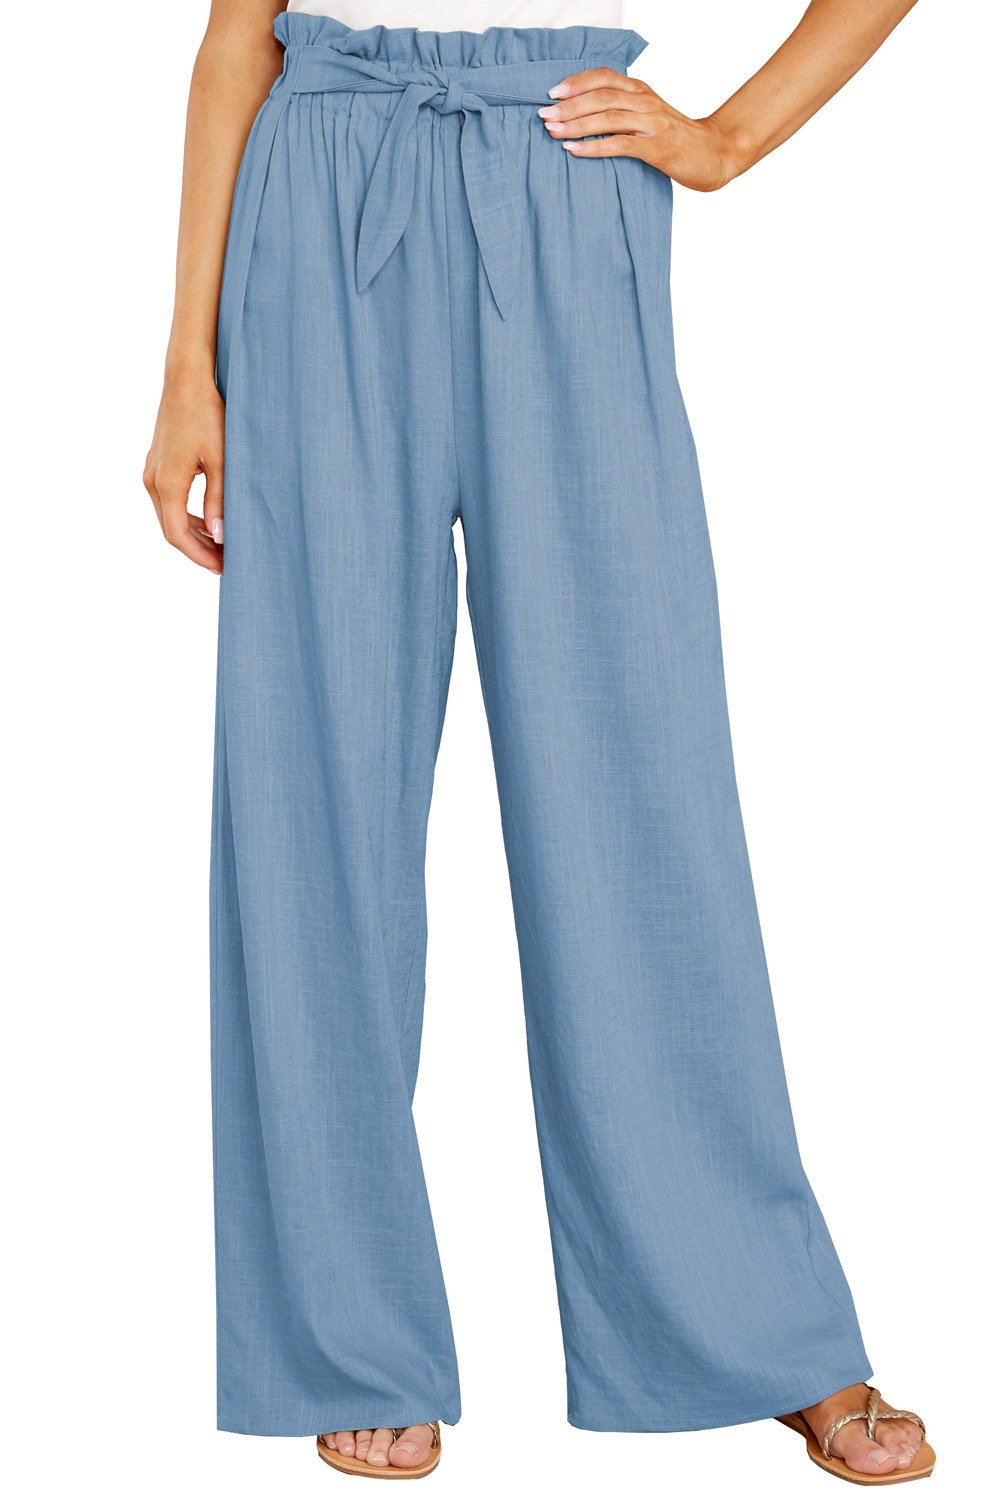 Casual Women Linen Long Pants-Women Bottoms-Light Blue-S-Free Shipping Leatheretro